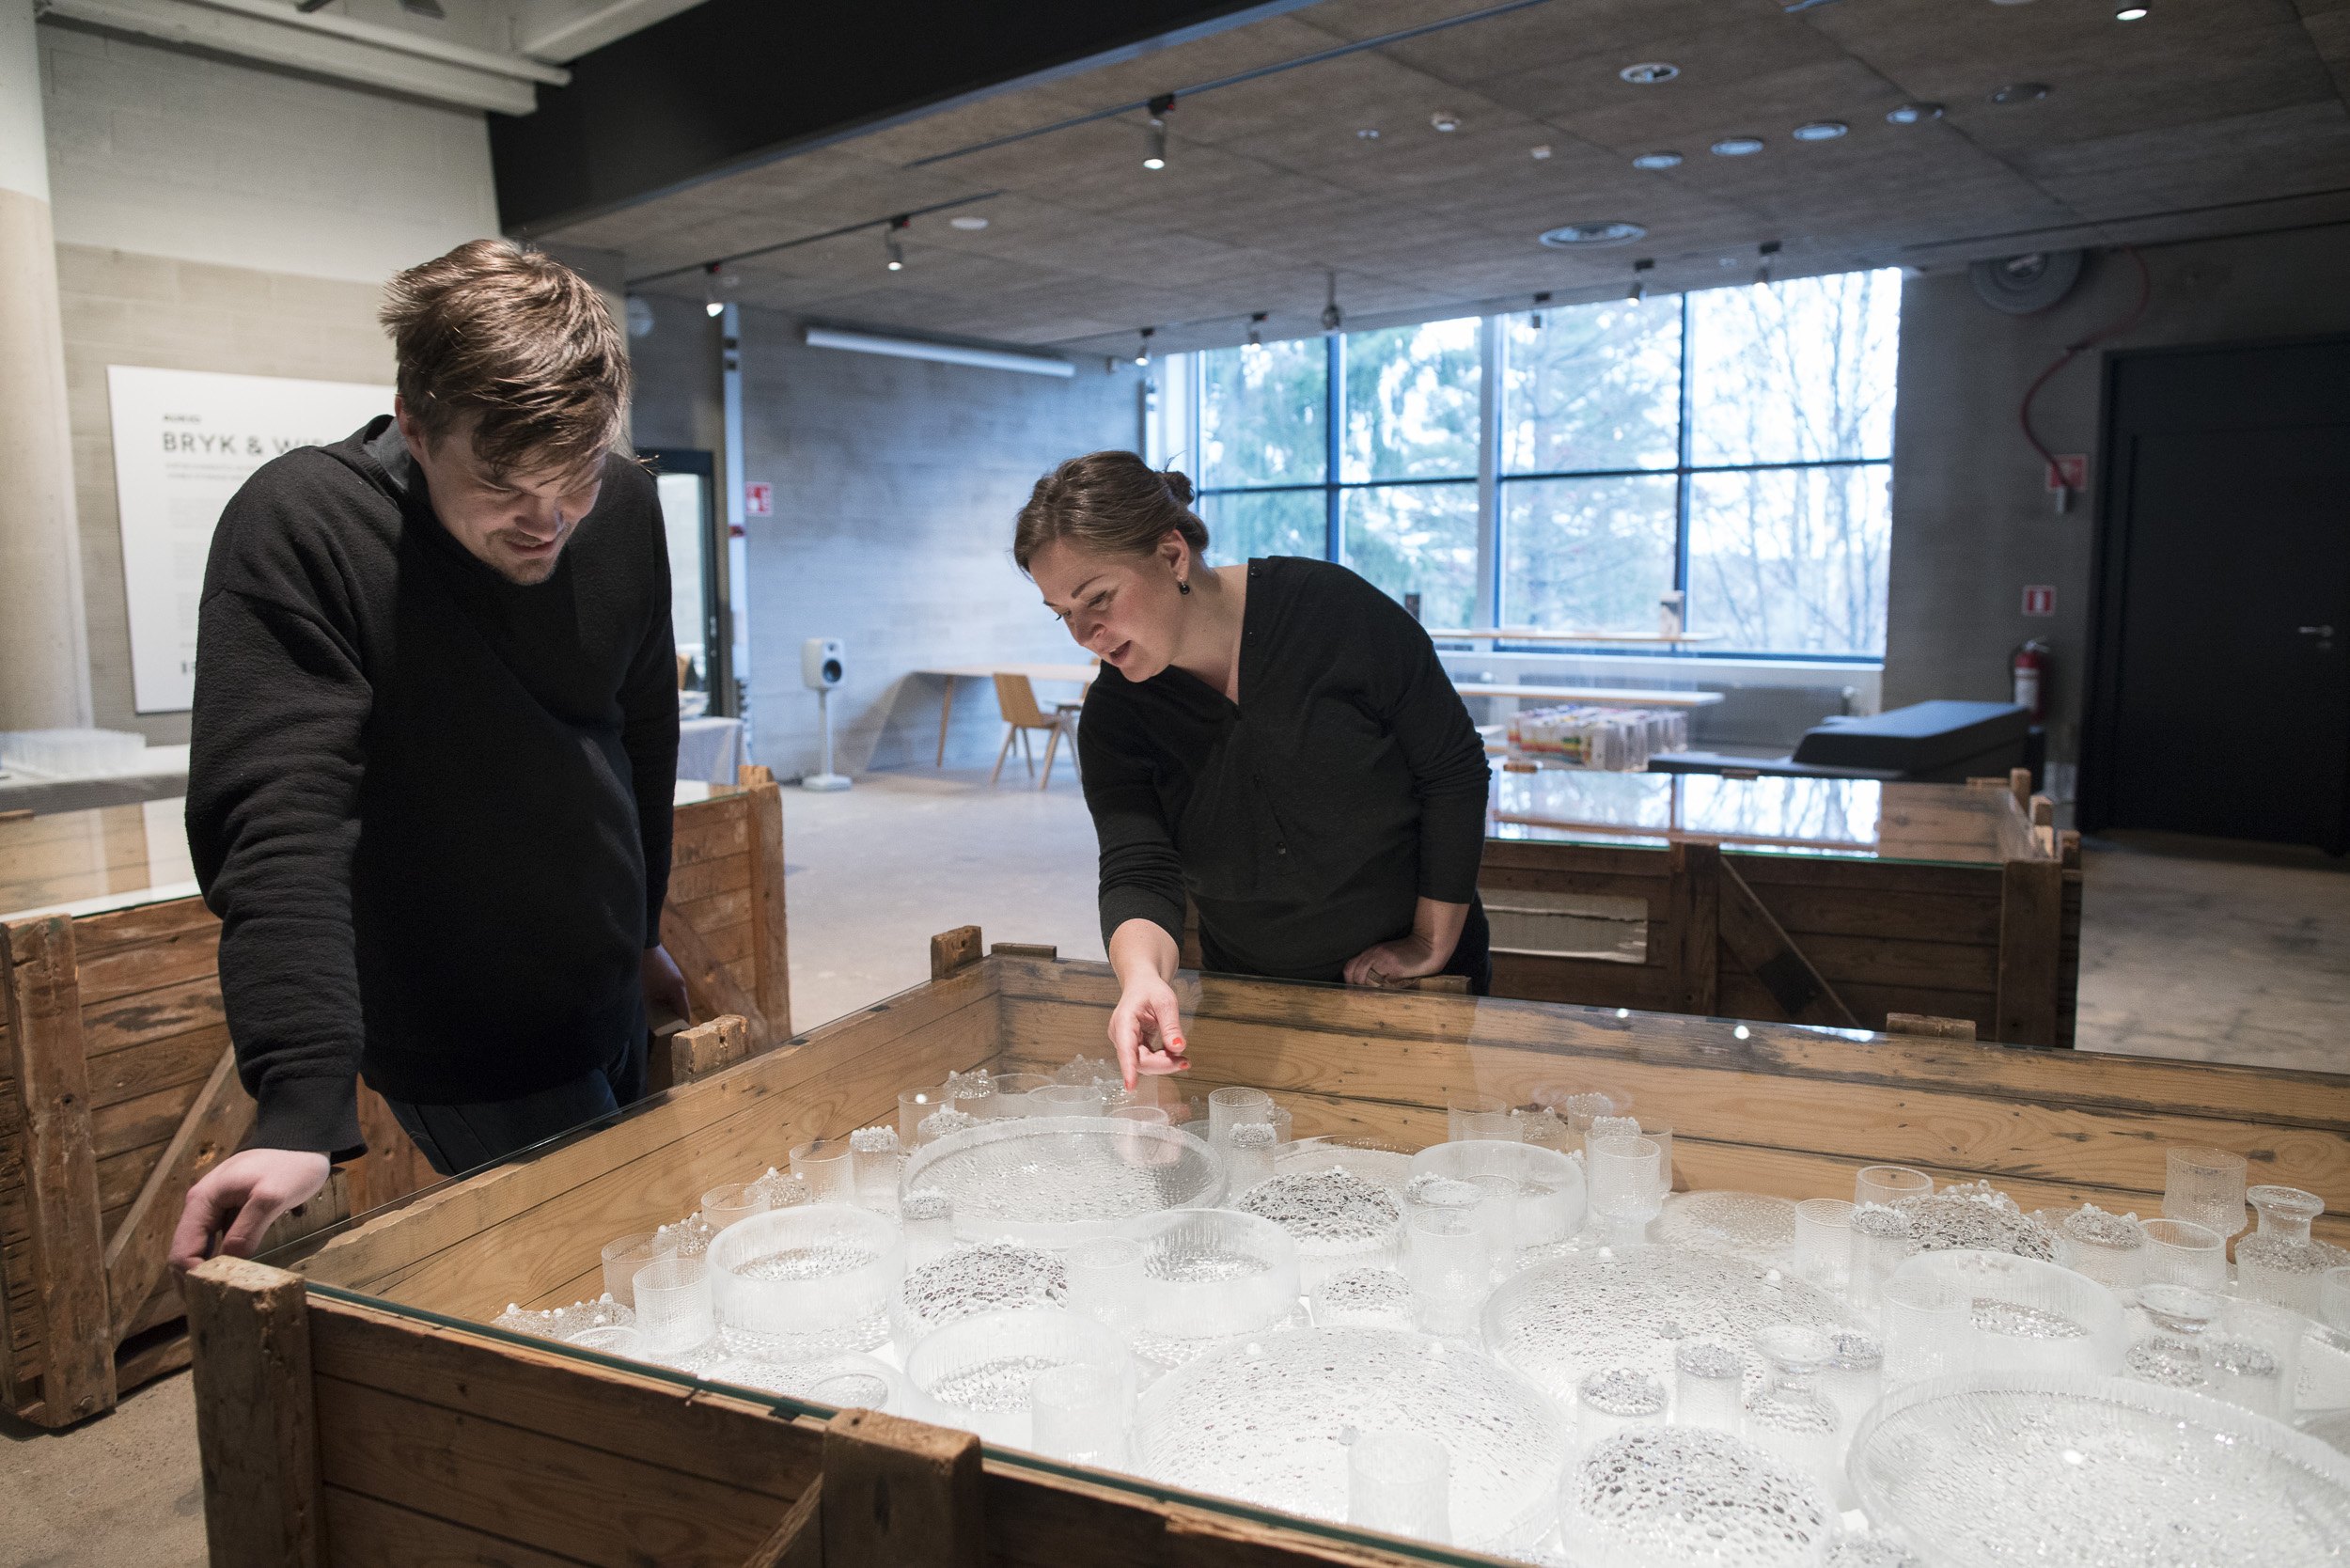 Bryk & Wirkkala: Visible Storage exhibition at EMMA